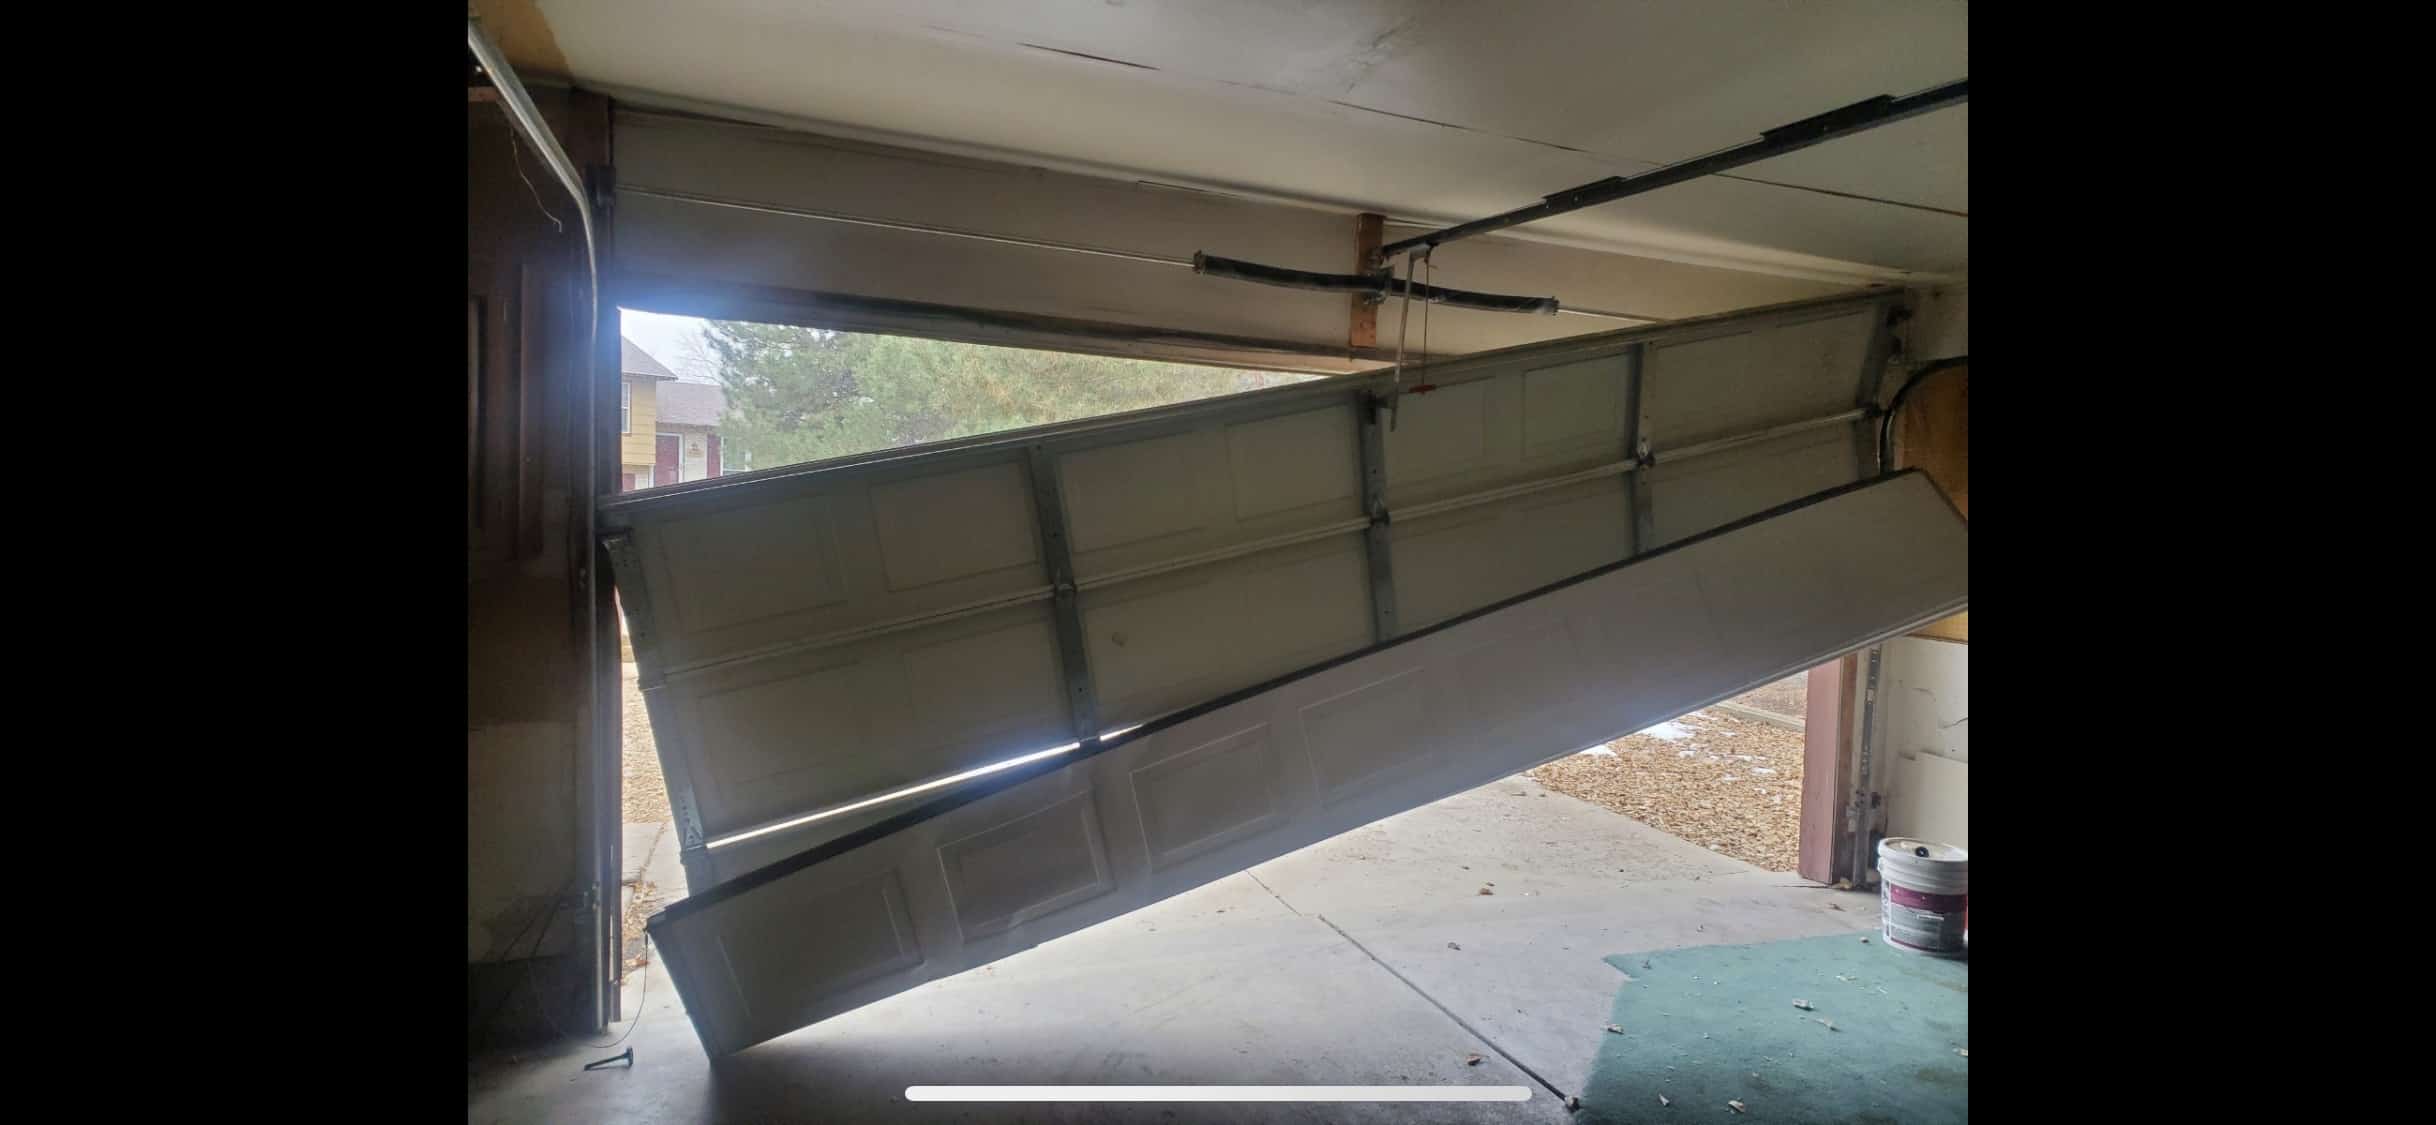 A severely damaged garage door